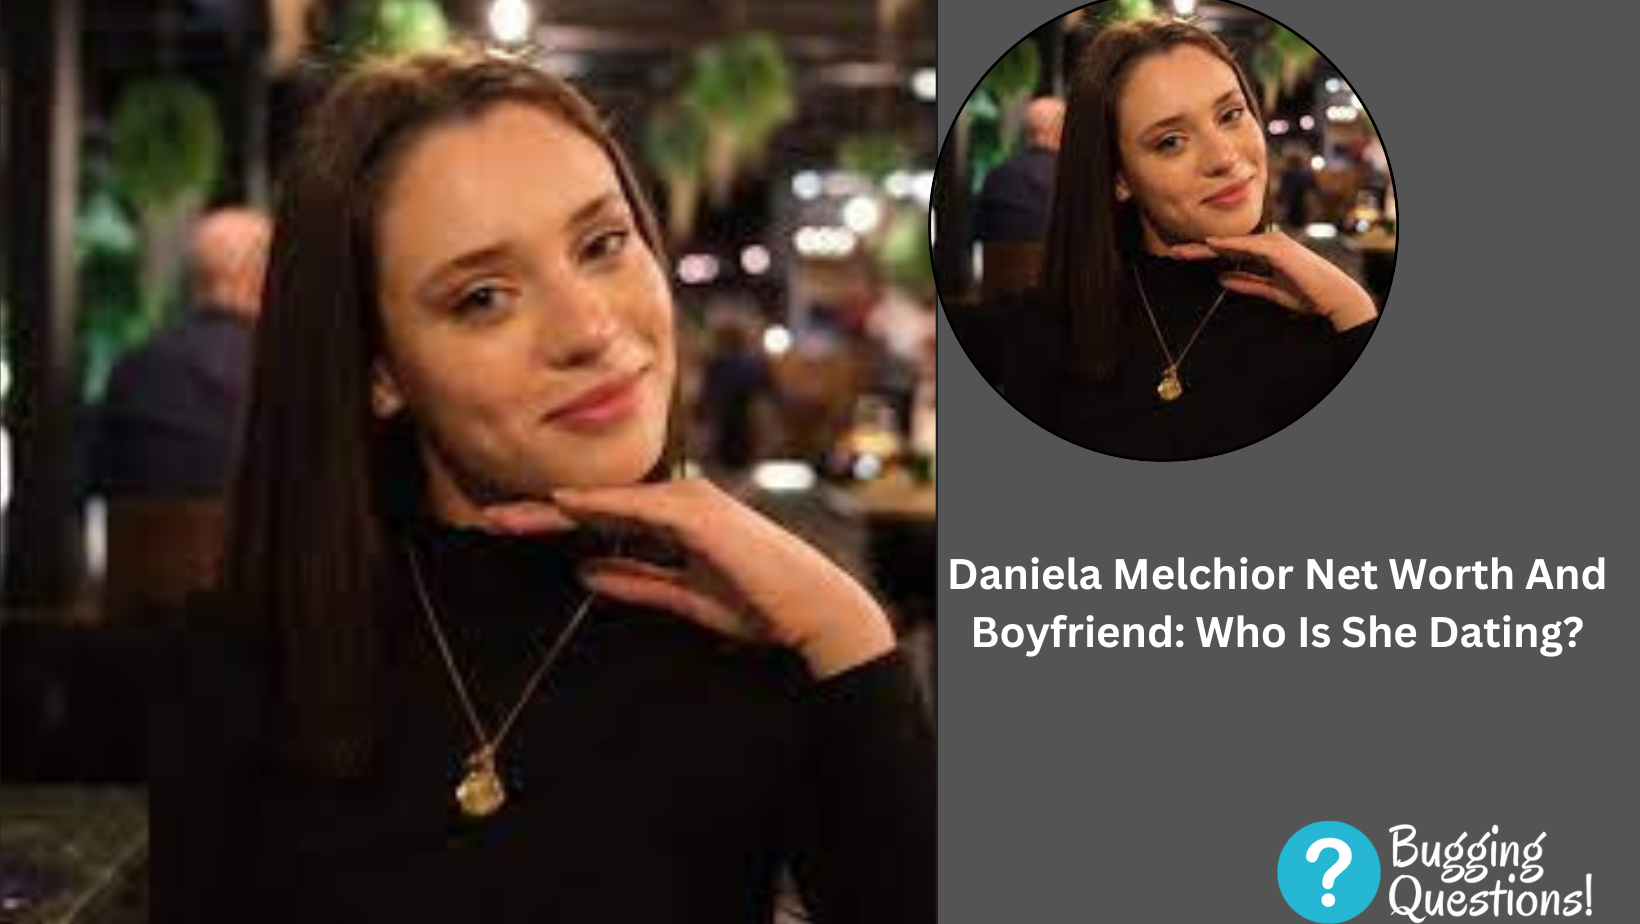 Daniela Melchior Net Worth And Boyfriend: Who Is She Dating?